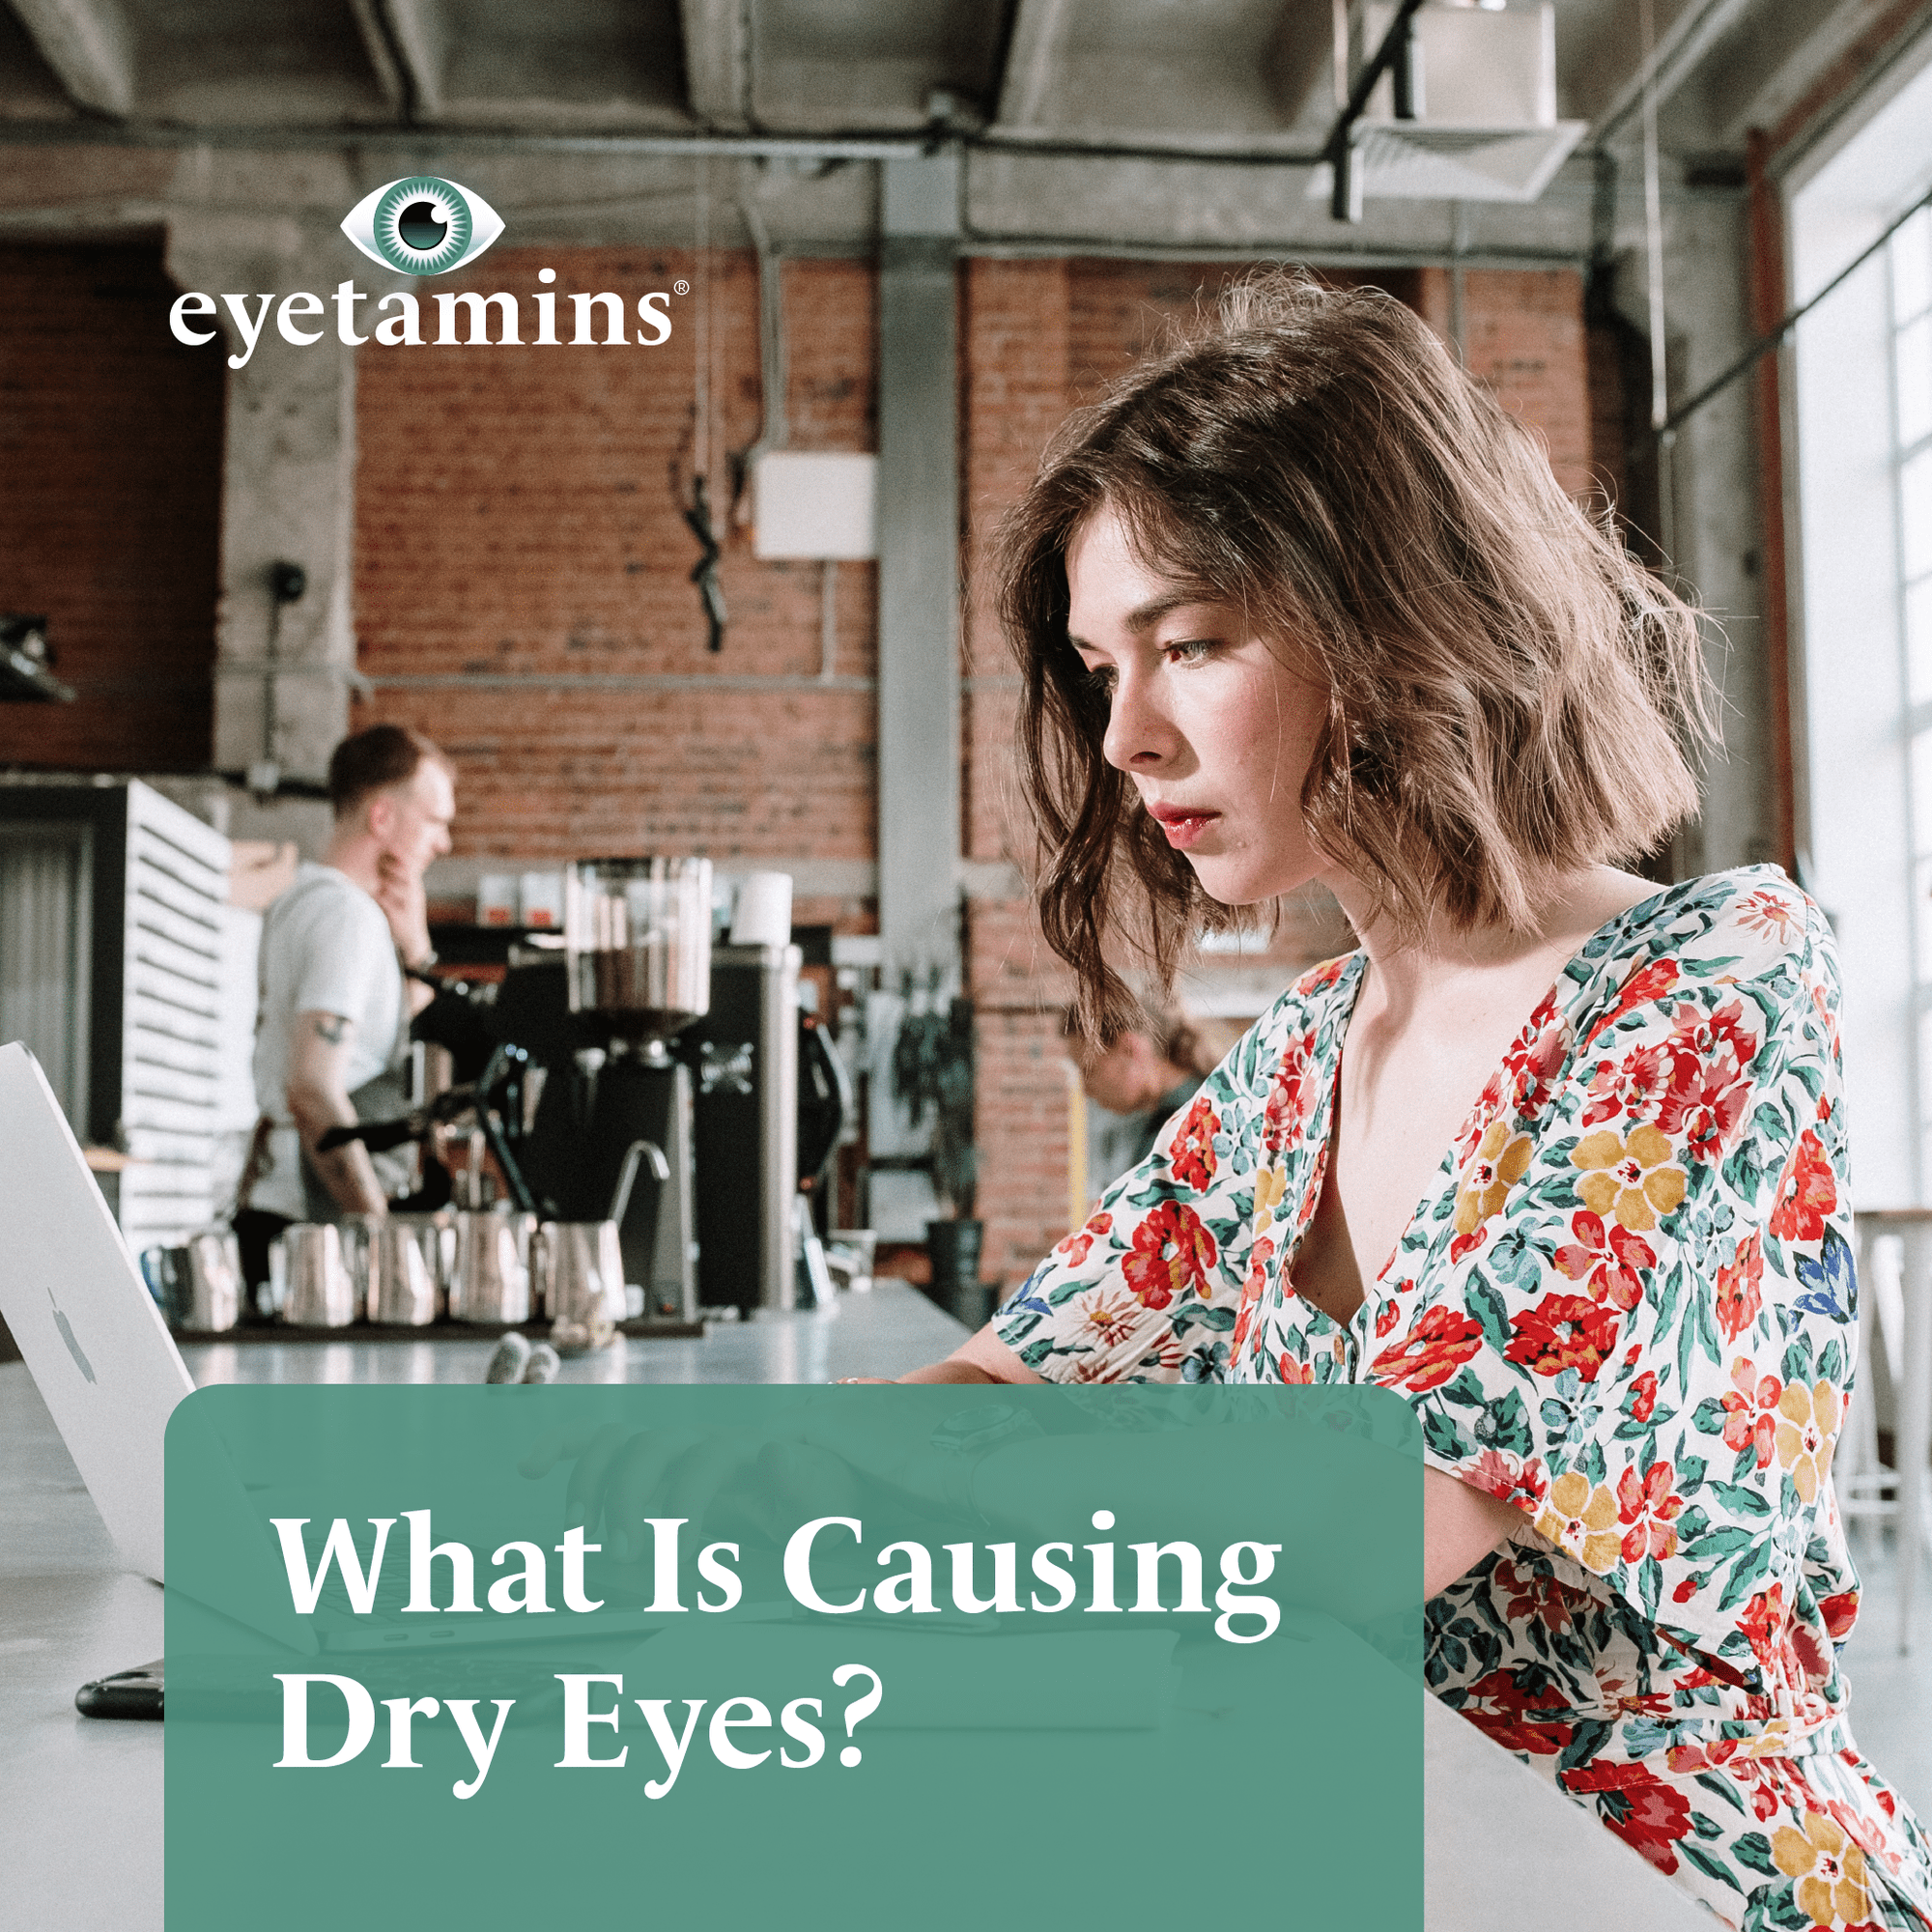 Eyetamins - What Is Causing Dry Eyes?